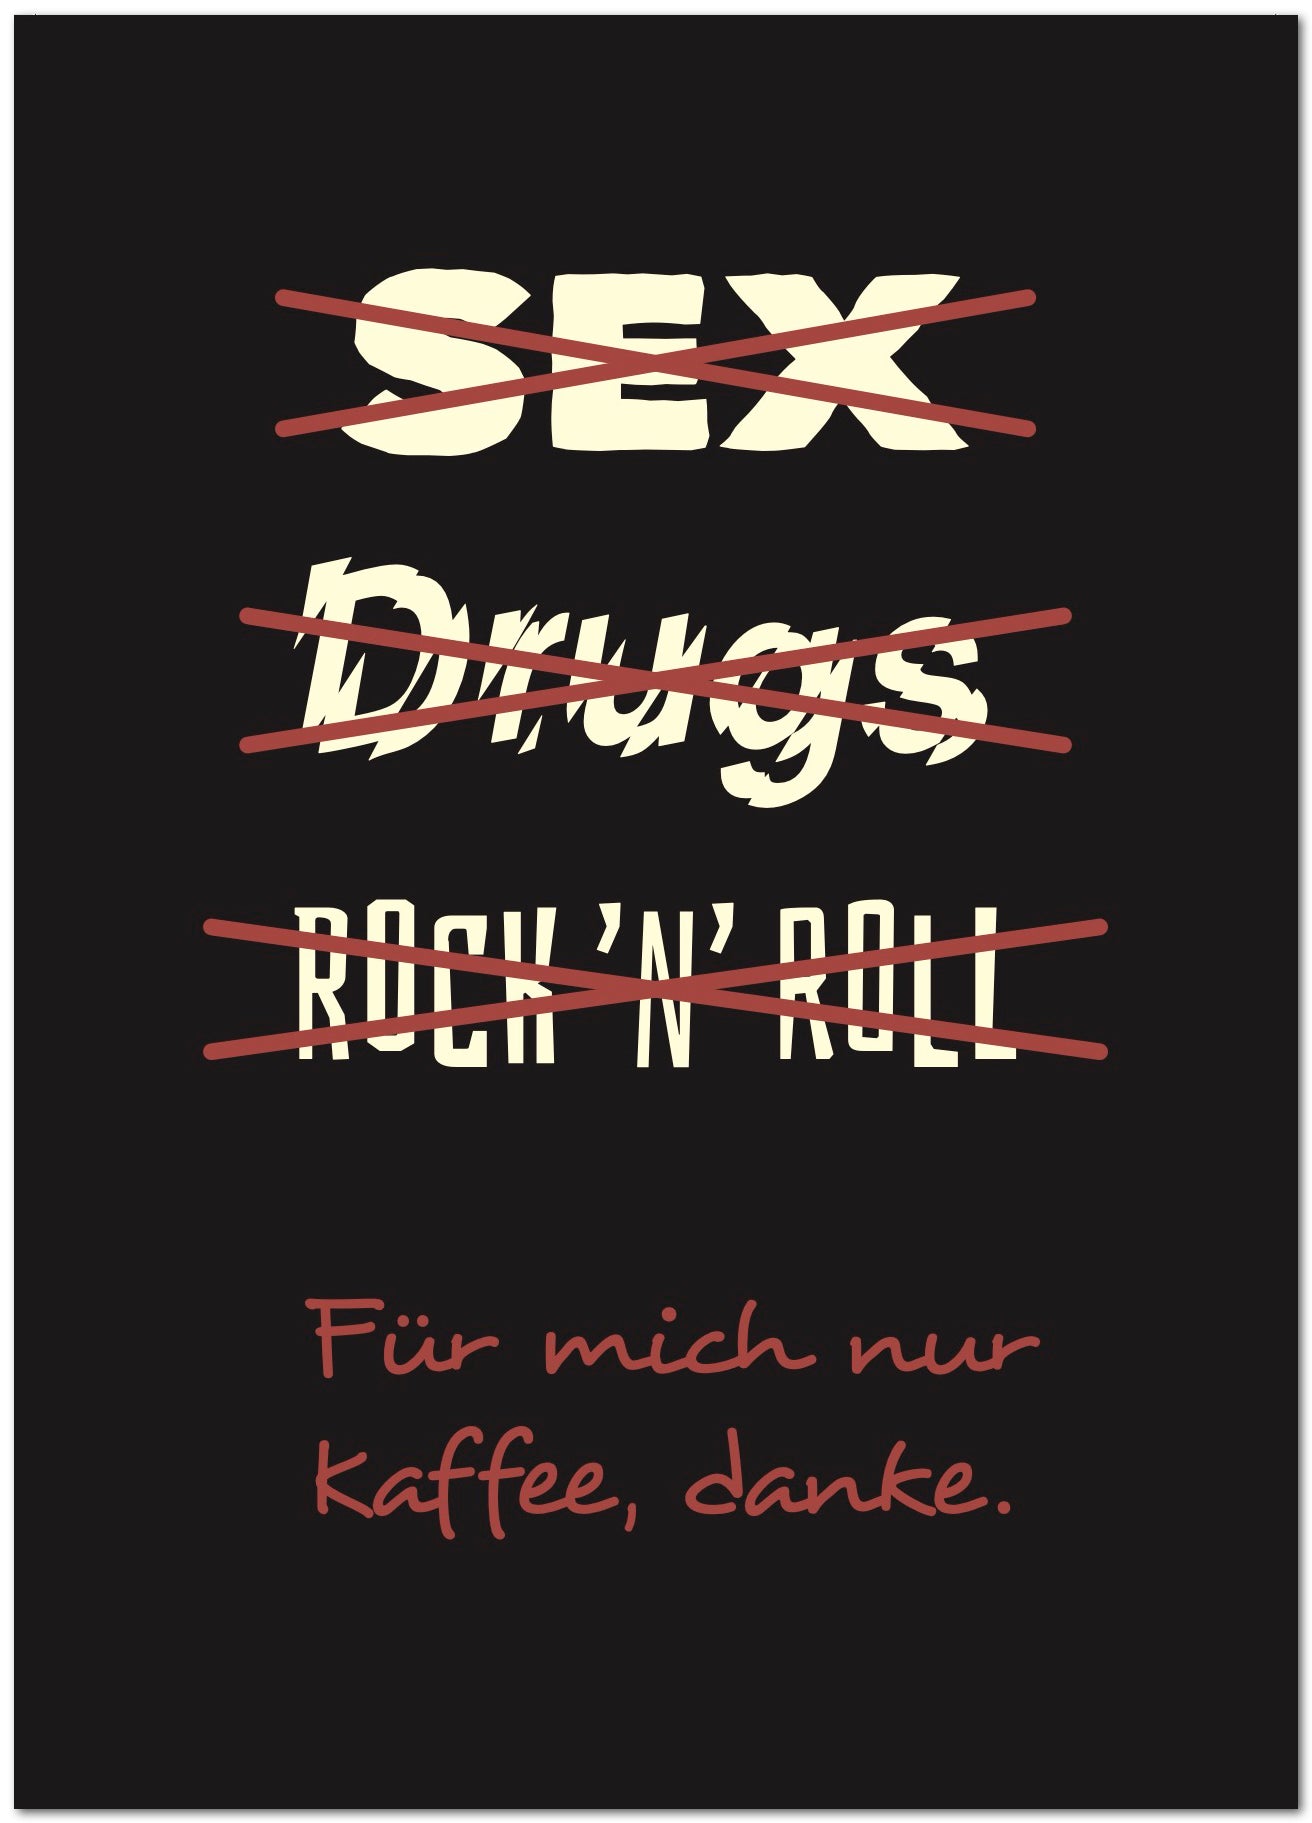 Postkarte "Sex & Drugs & what?"